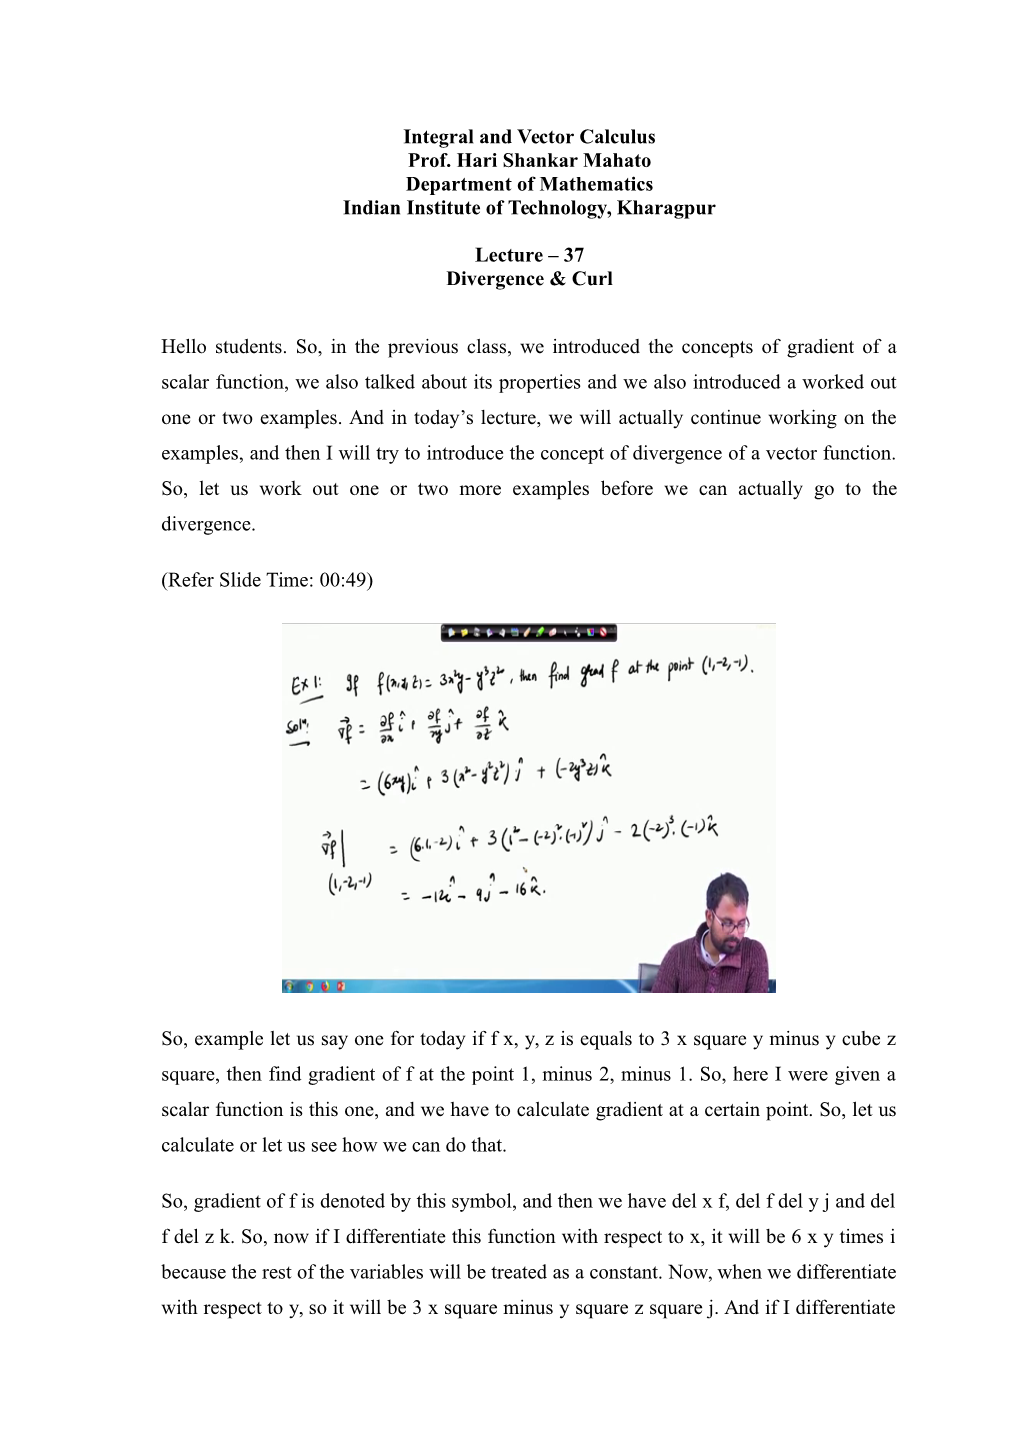 Integral and Vector Calculus Prof. Hari Shankar Mahato Department of Mathematics Indian Institute of Technology, Kharagpur